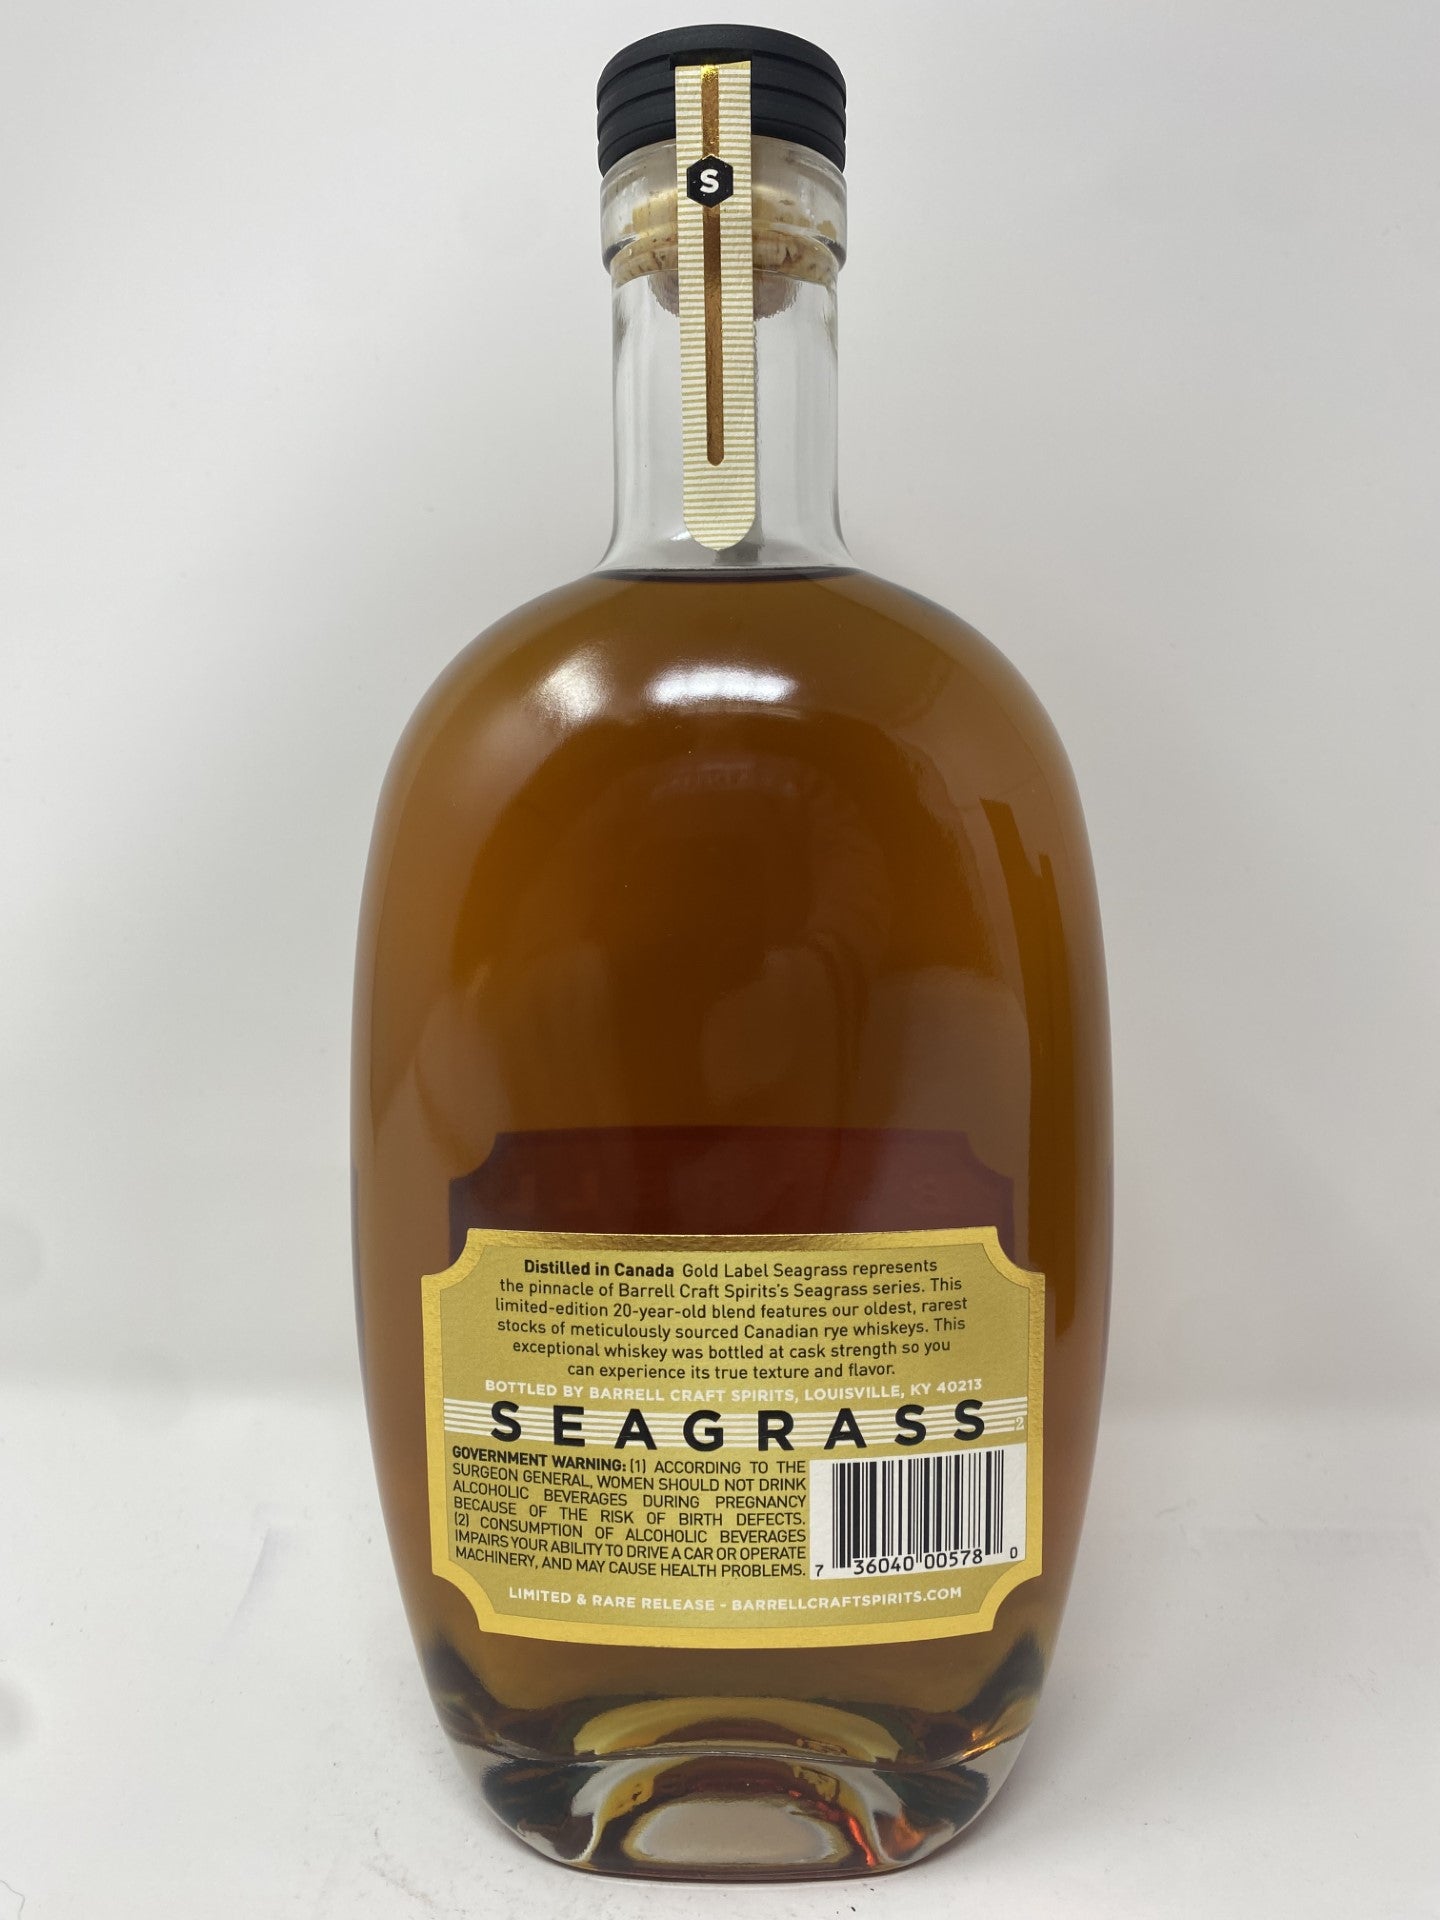 Barrell Craft Spirits Seagrass (Gold Label) Rye Whiskey